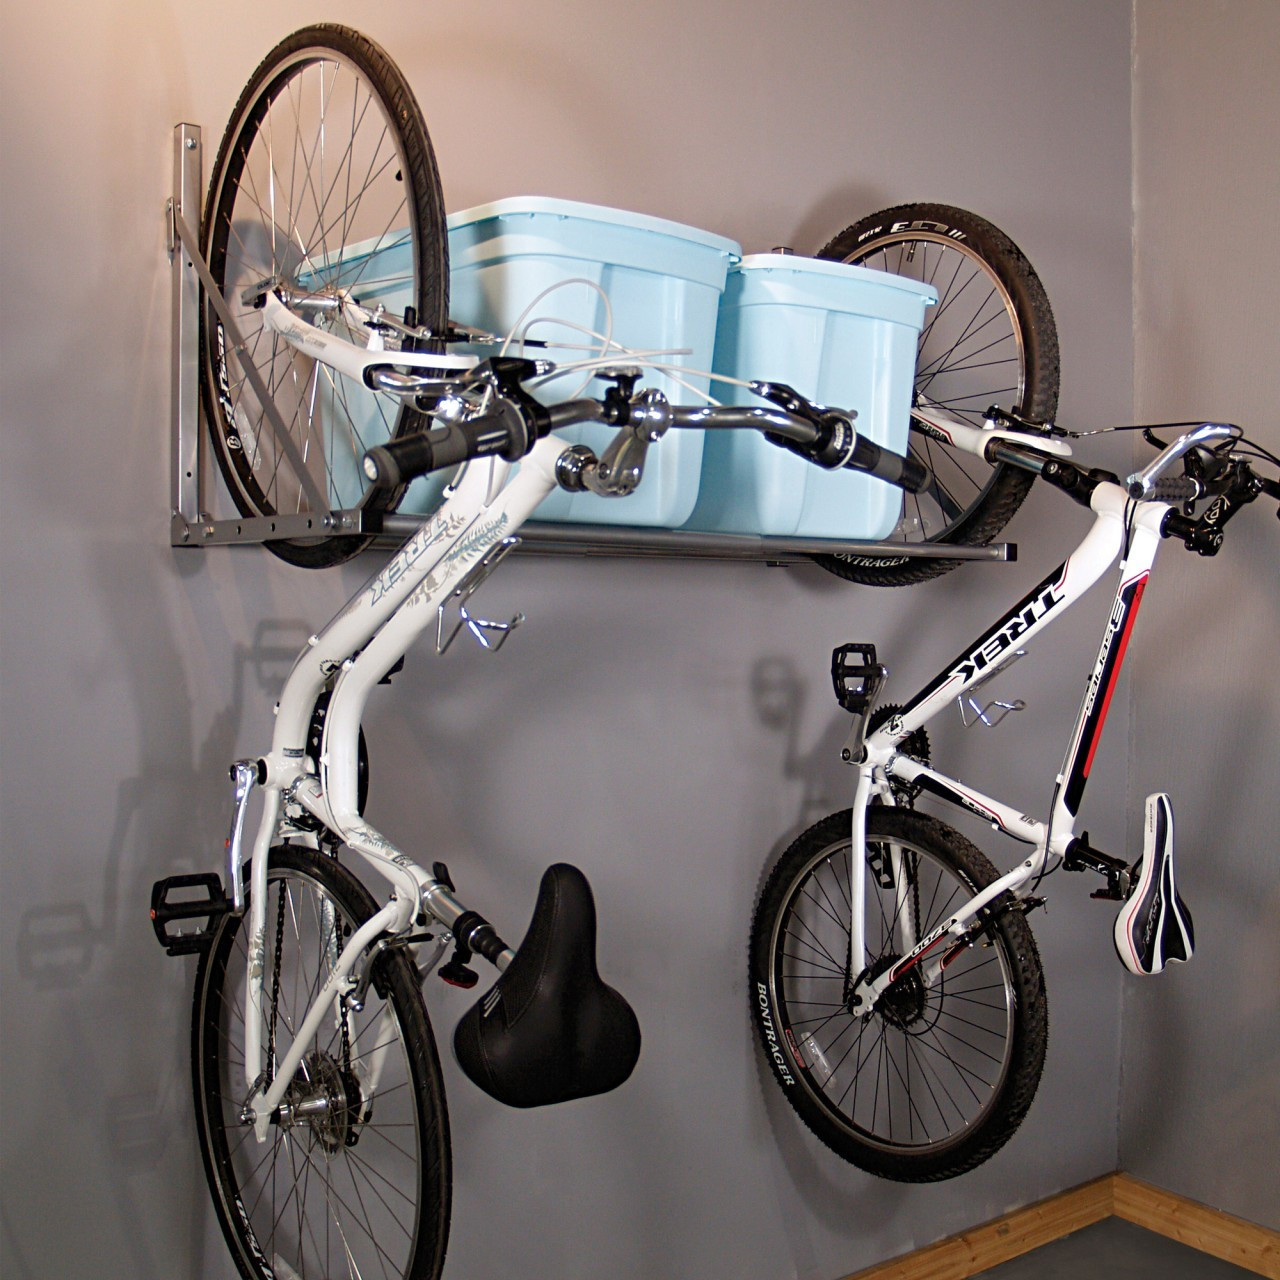 DIY Wall Bike Rack
 15 neat garage organization ideas